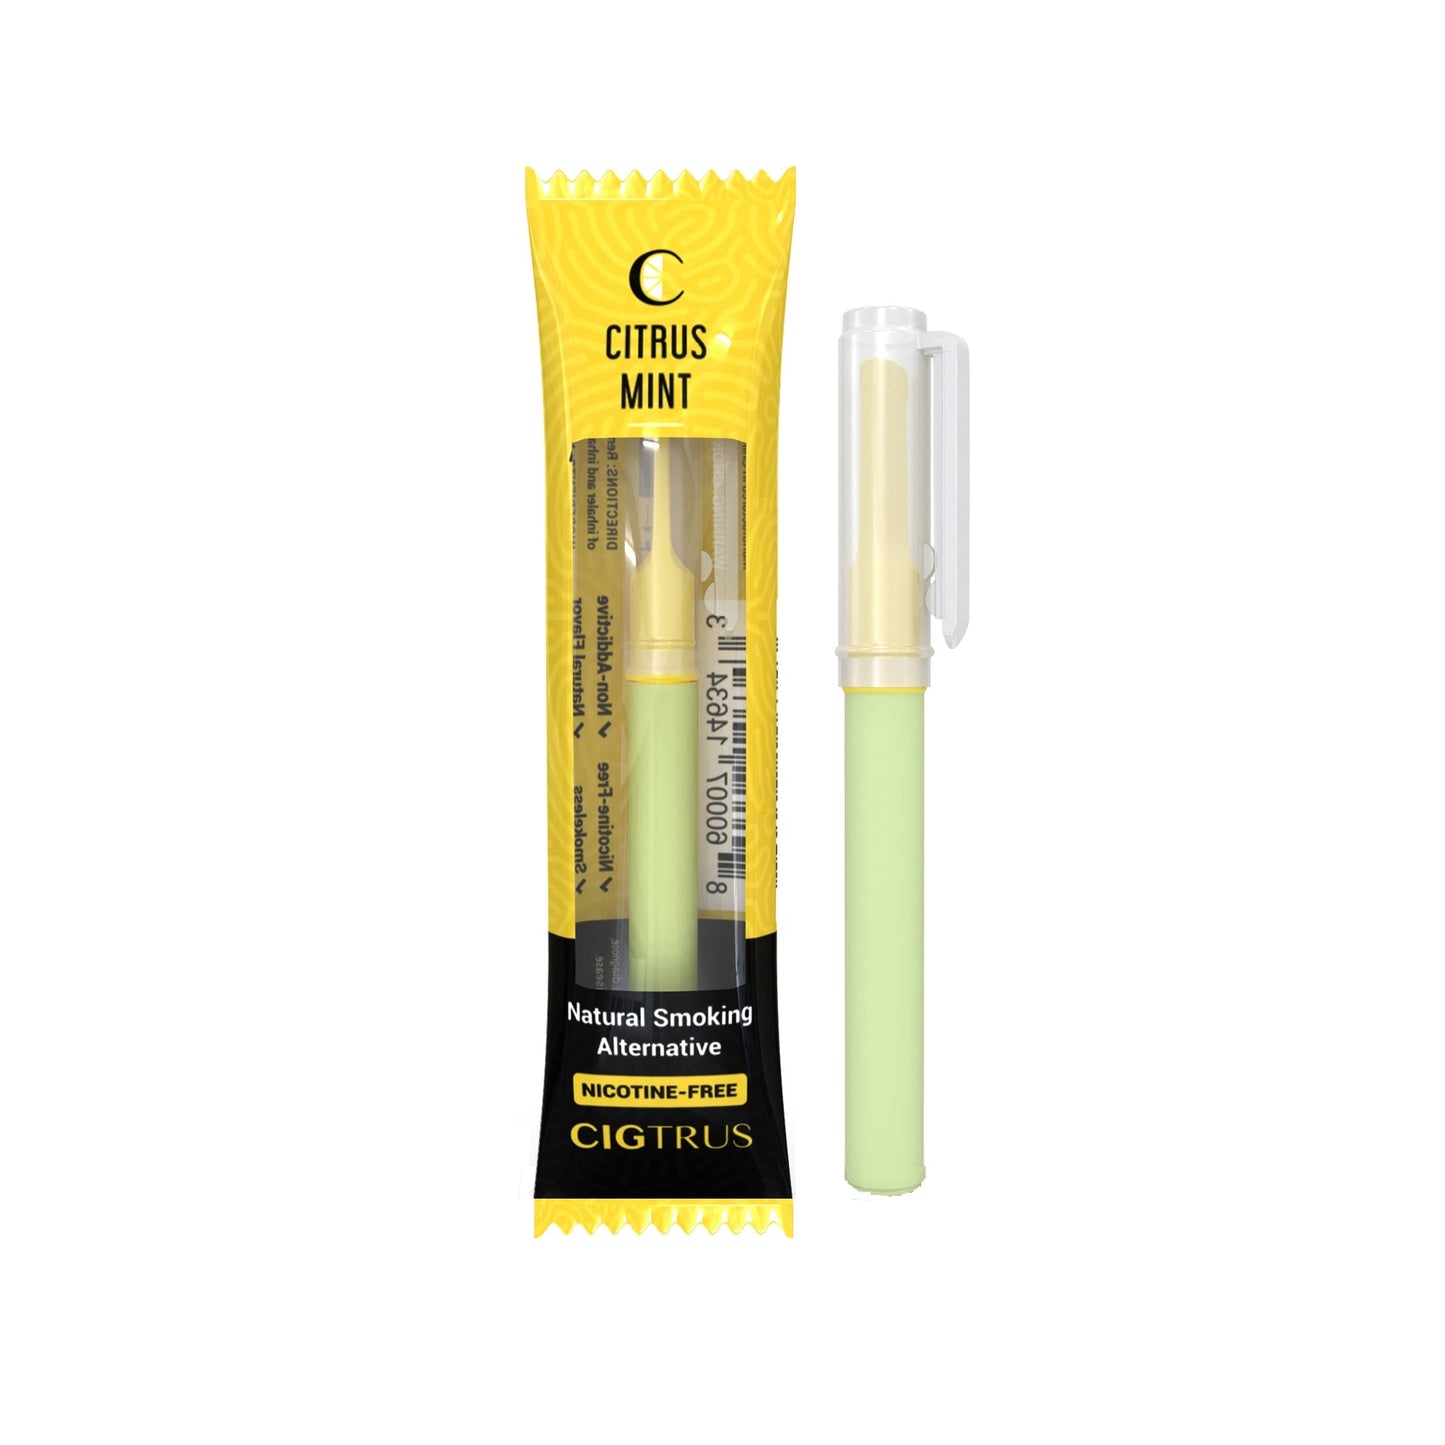 Cigtrus Smokeless Oxygen Air Inhaler Oral Fixation Relief Natural Quit Aid Behavioral Support – Pick Your Flavor - Citrus Mint - cigtrus.comcigtrus.com